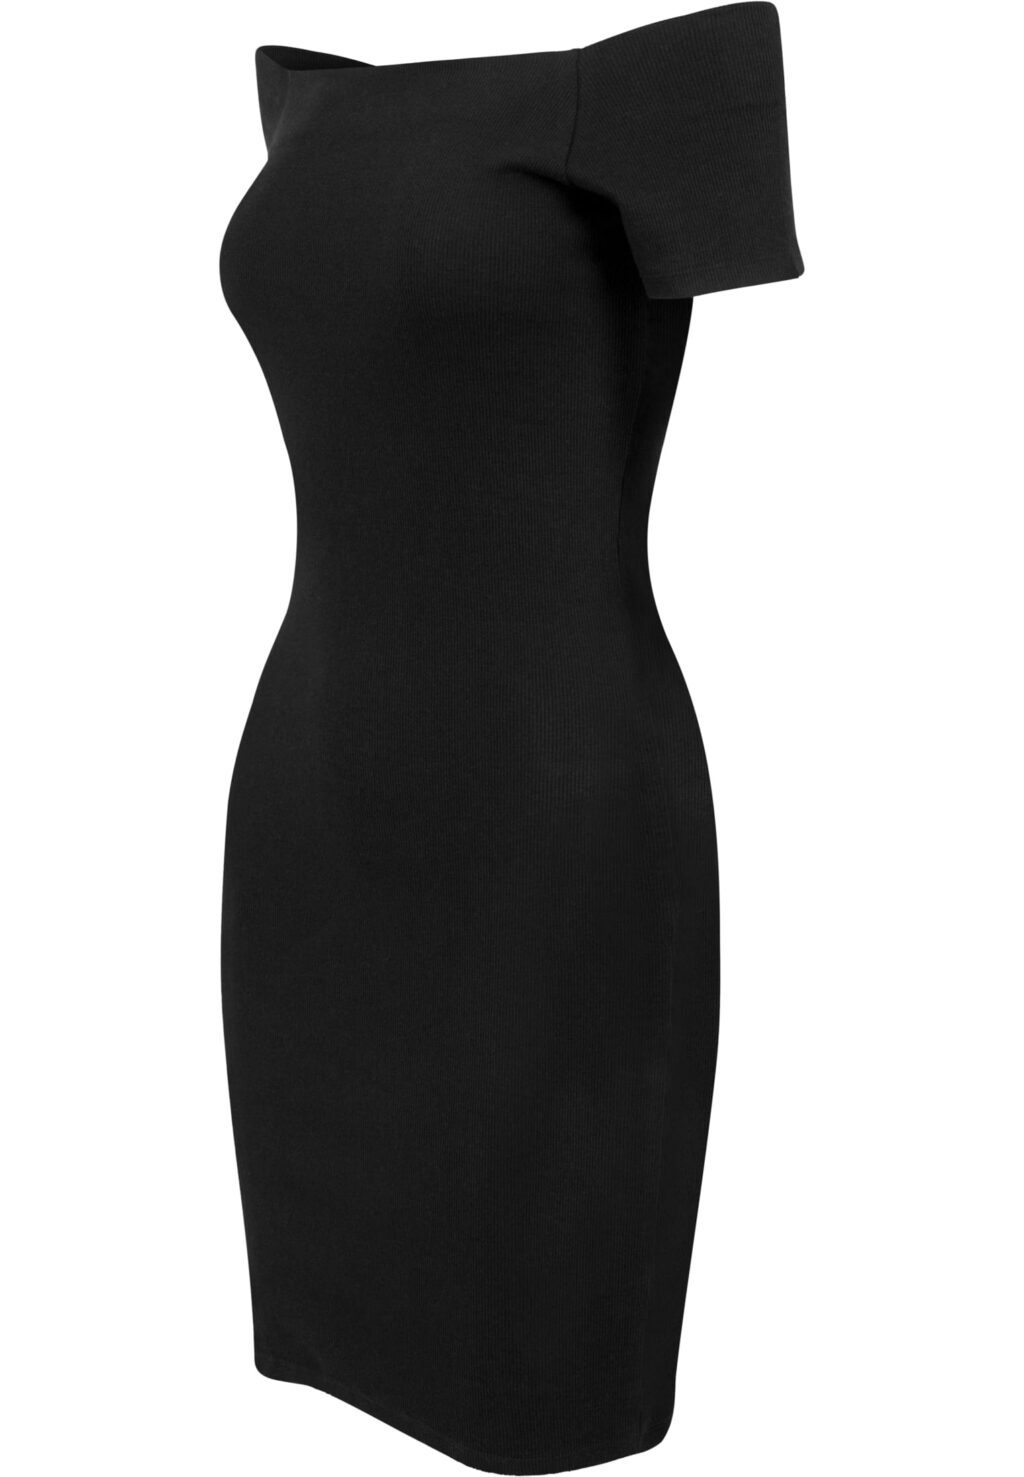 Urban Classics Ladies Off Shoulder Rib Dress black TB1501